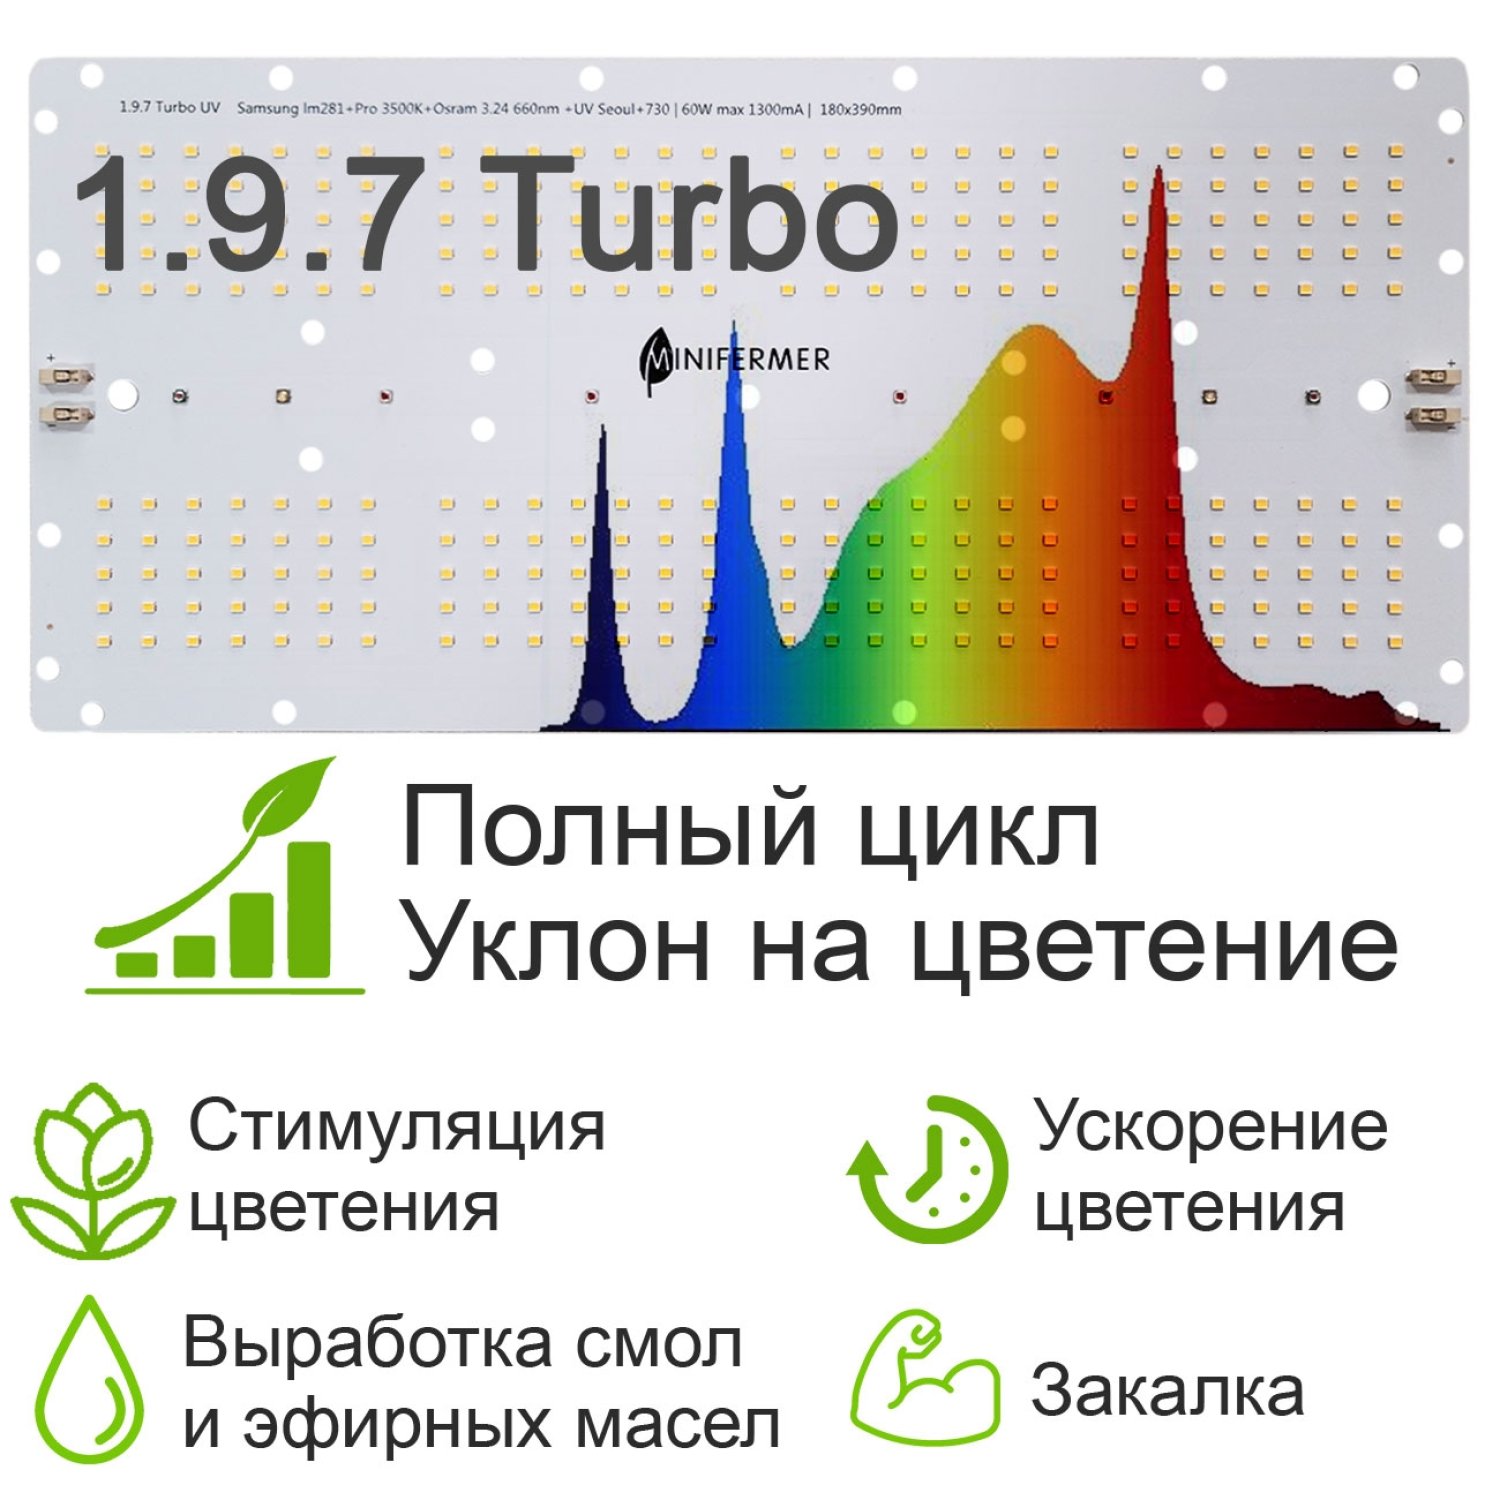 1.9.7 Turbo Quantum board Samsung lm281b+pro 3500K + Osram 3.24 660nm+UV Seoul+730нм